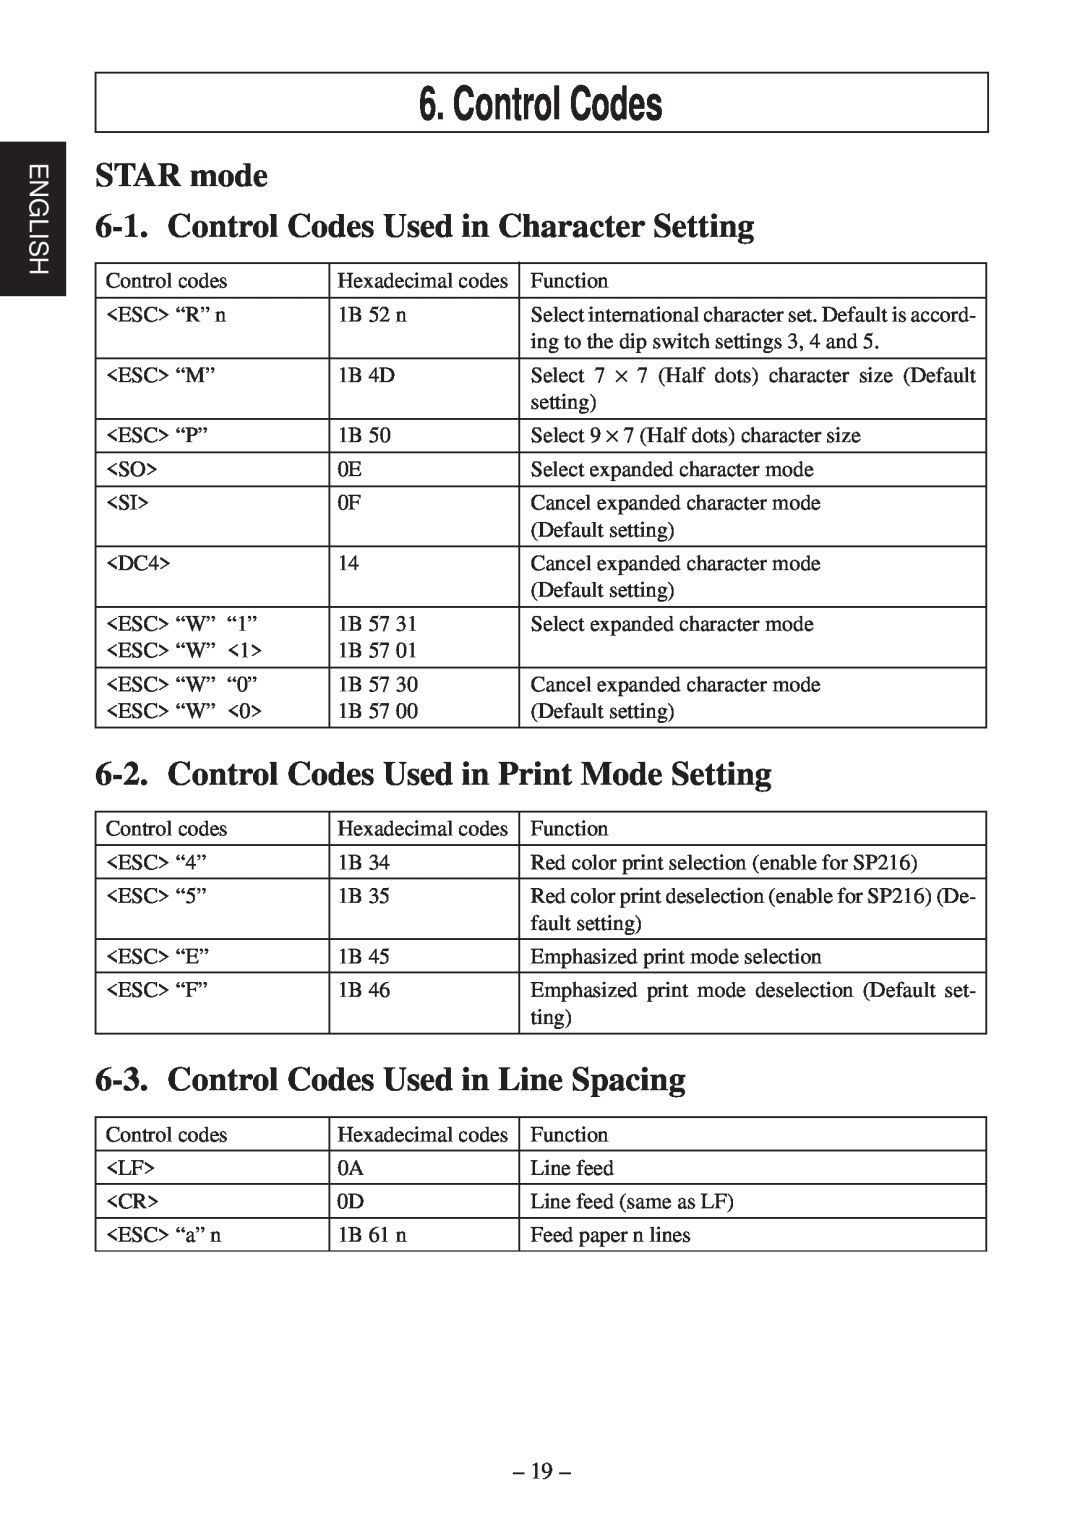 Star Micronics SP200F STAR mode 6-1. Control Codes Used in Character Setting, Control Codes Used in Print Mode Setting 